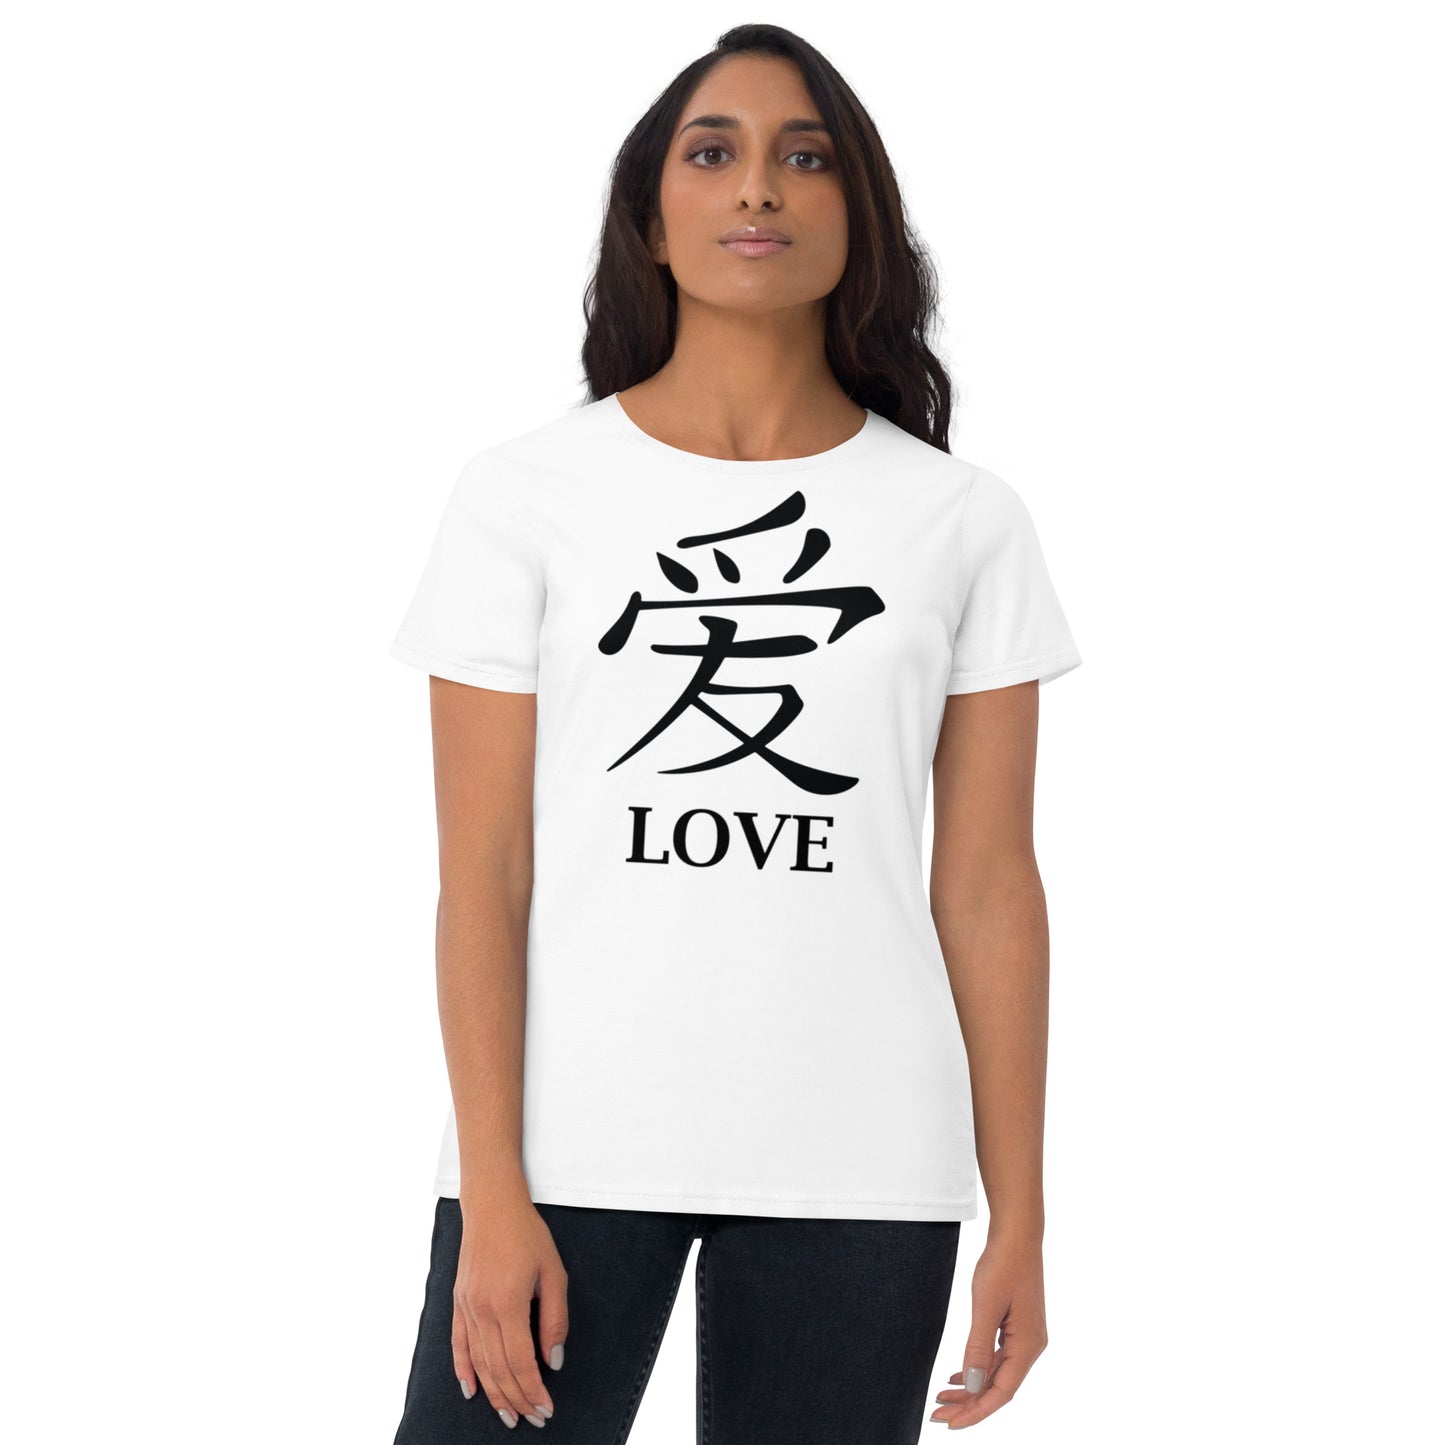 LOVE Chinese 爱 Short sleeve t-shirt - -Lighten Your Life [ItsAboutTime.Life][date]